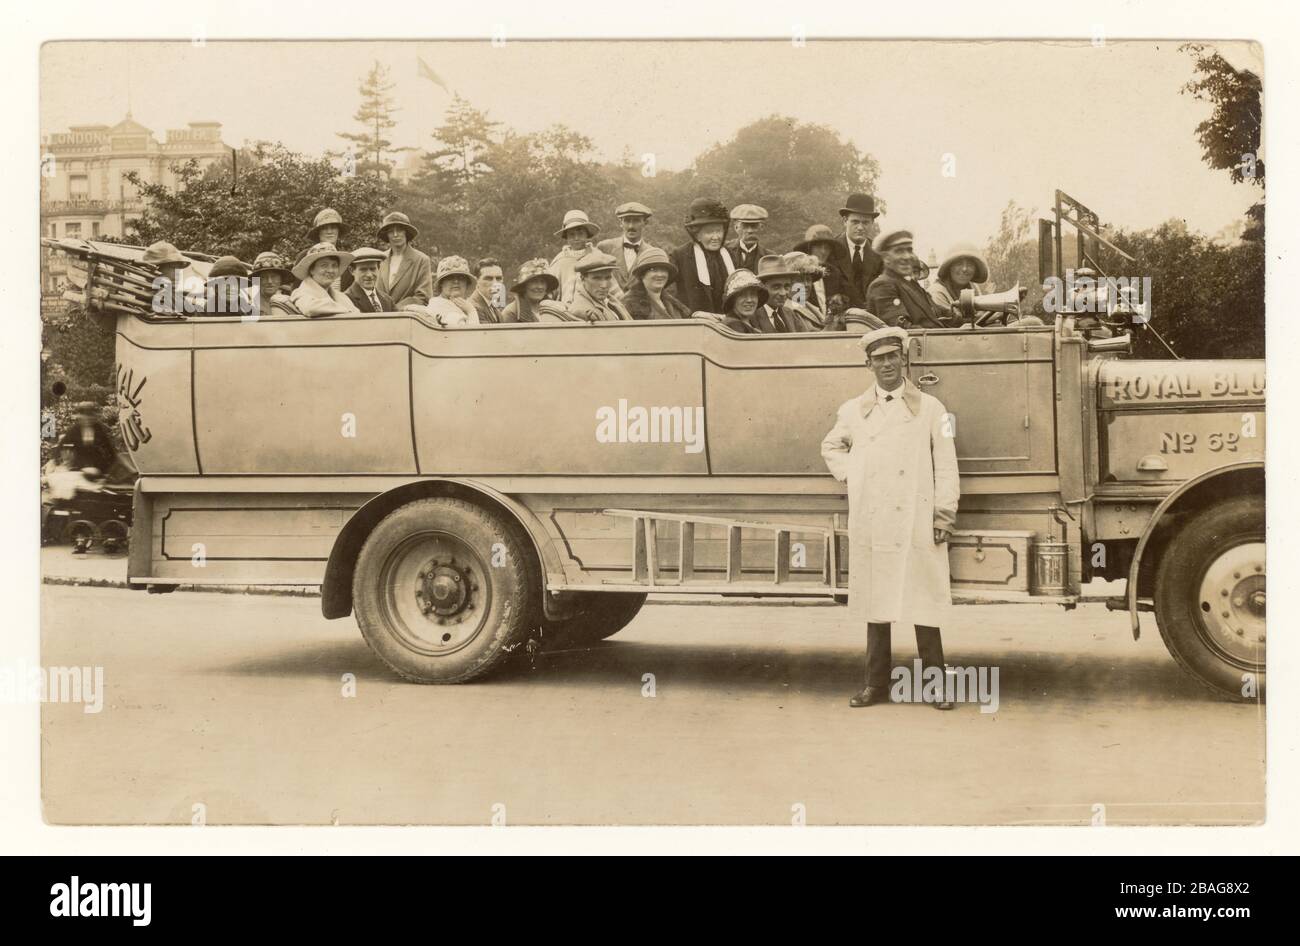 Anfang 1900 wurde die Postkarte des Royal Blue Charabanc Exkurses mit uniformiertem Fahrer, Charabanc-Bus Nr. 6D, The London Hotel in Background, Bournemouth, Dorset, England, Großbritannien, Großbritannien, Großbritannien, ca. Anfang der 1920er Jahre ausgestellt. Stockfoto